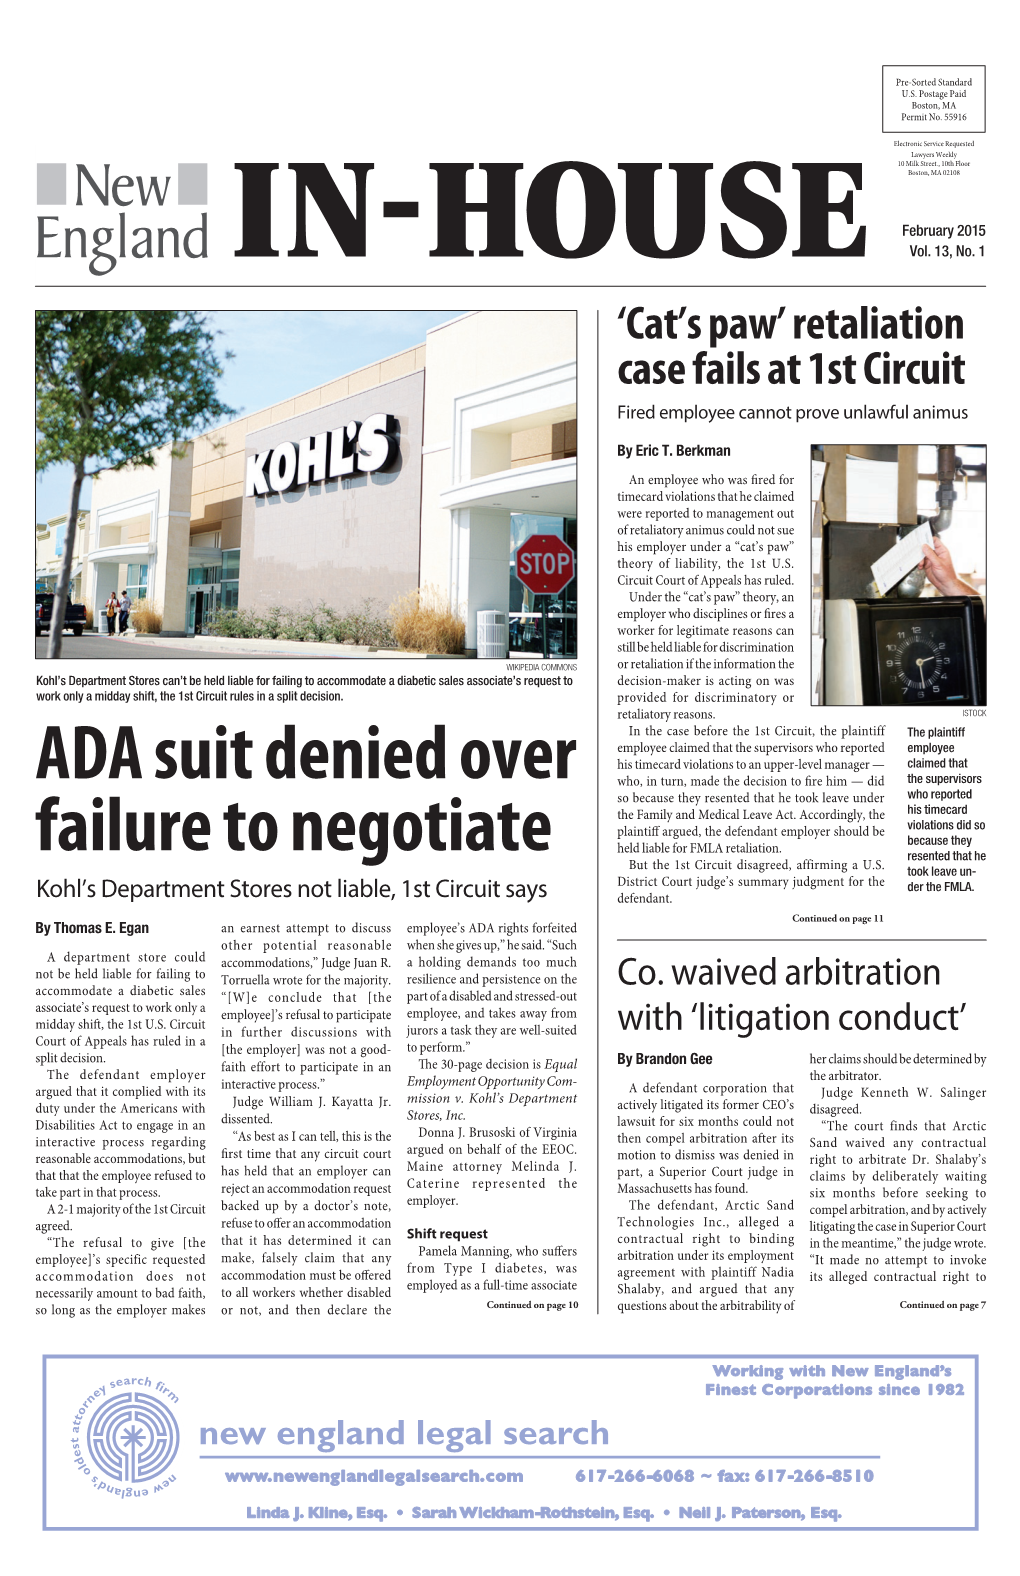 ADA Suit Denied Over Failure to Negotiate